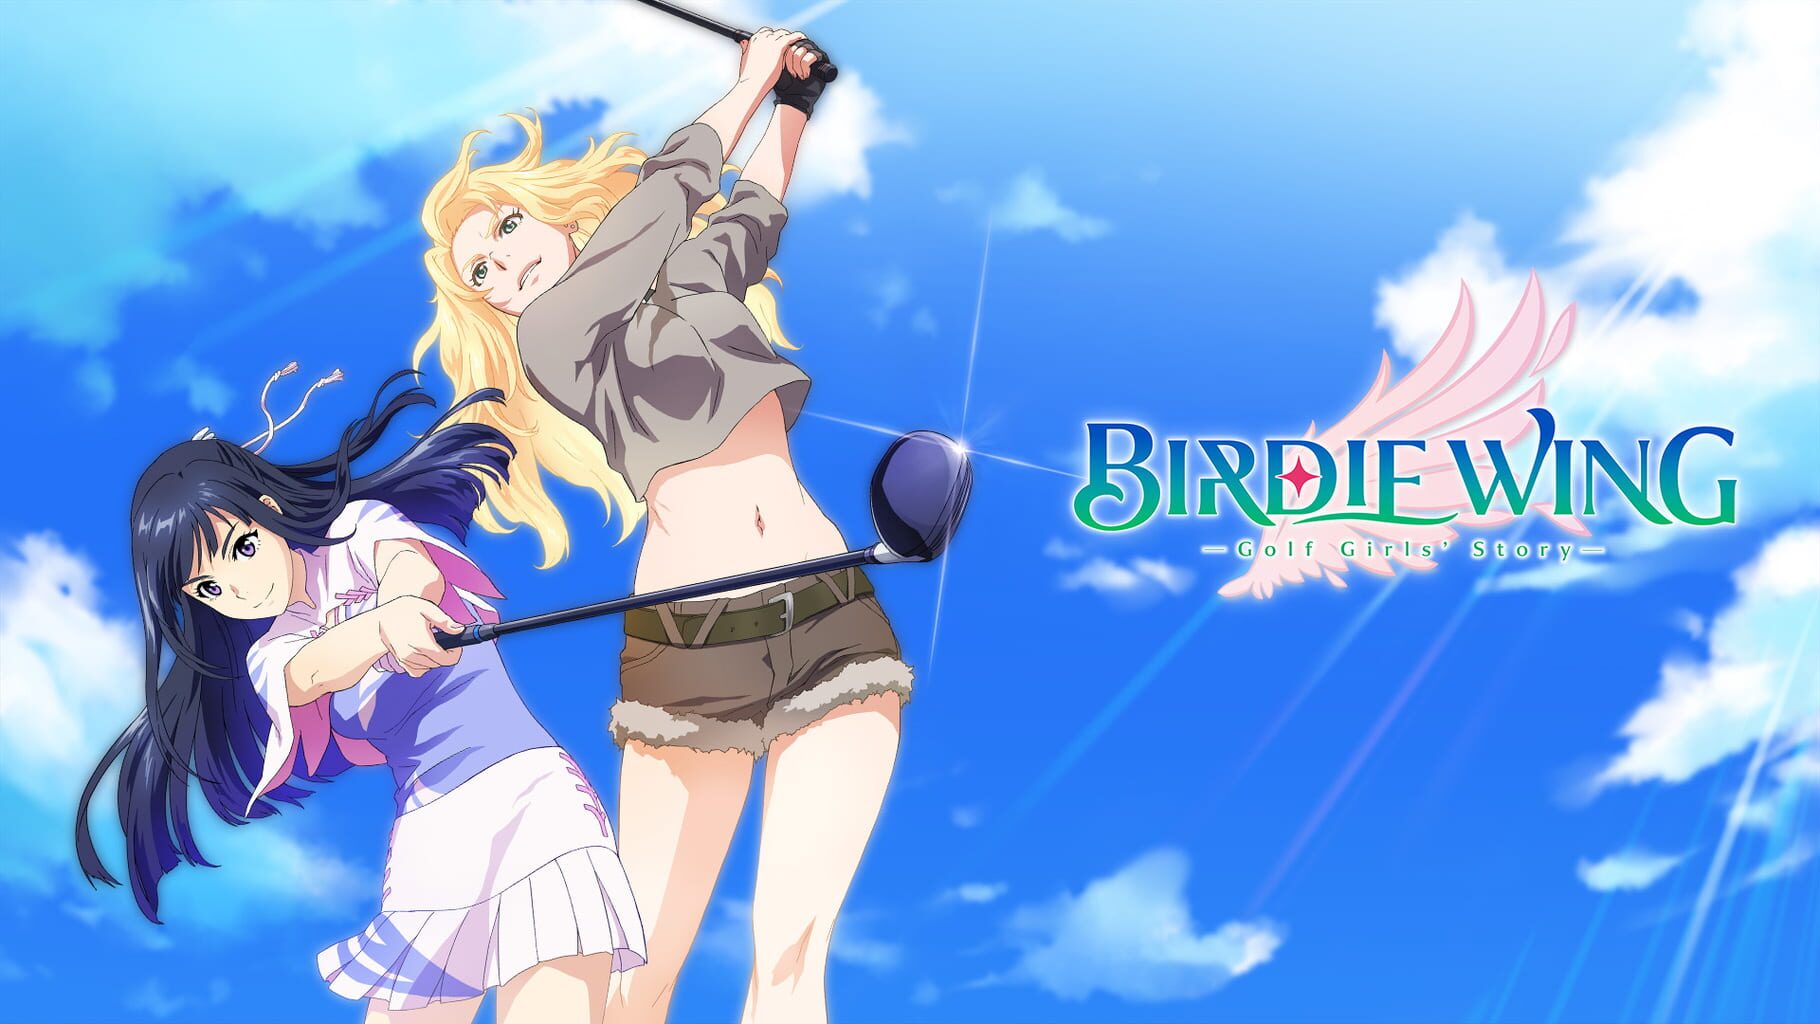 Birdie Wing: Golf Girls' Story artwork